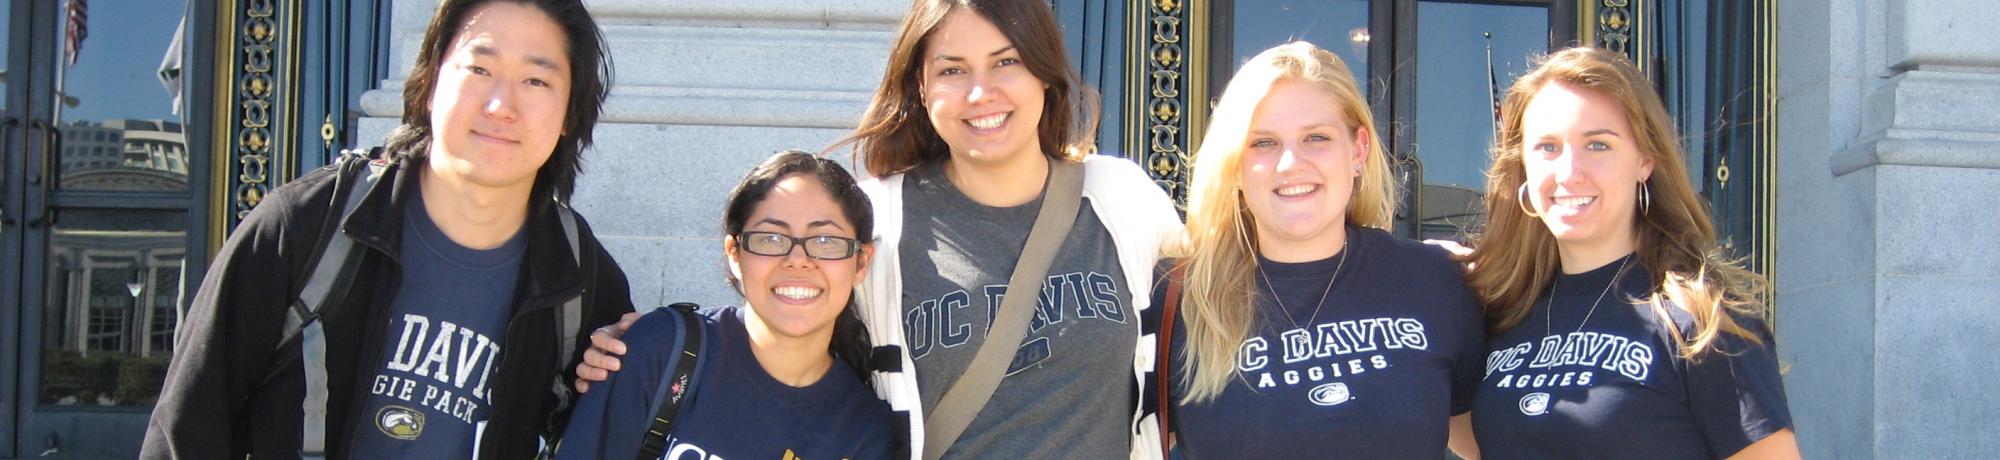 UC Davis students pose for photo on steps of San Francisco City Hall